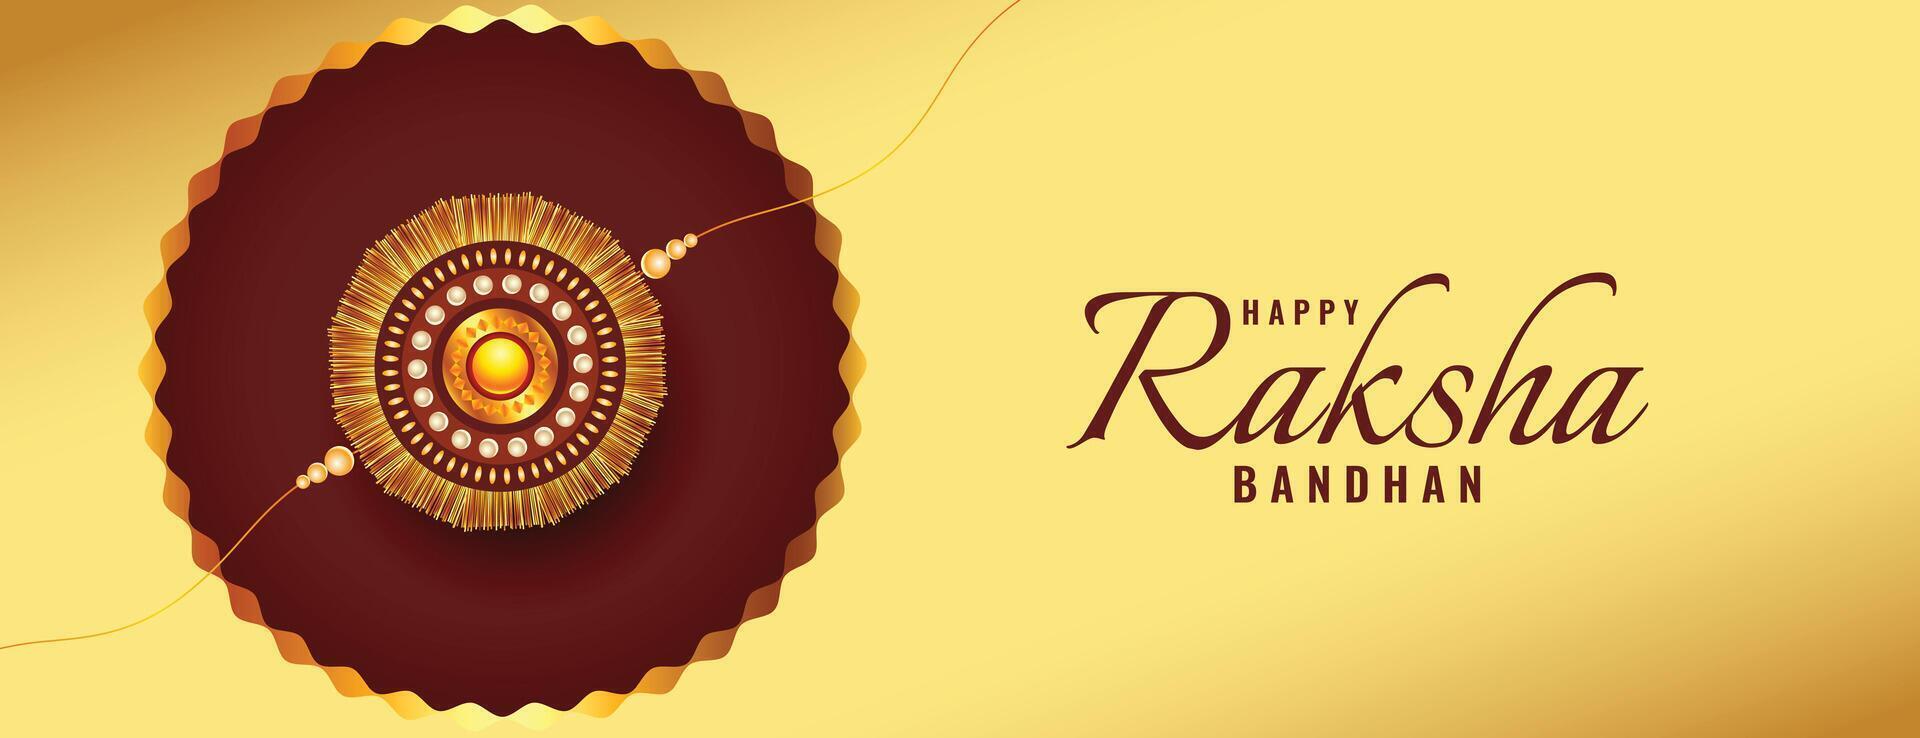 luxury raksha bandhan festival background with rakhi design vector